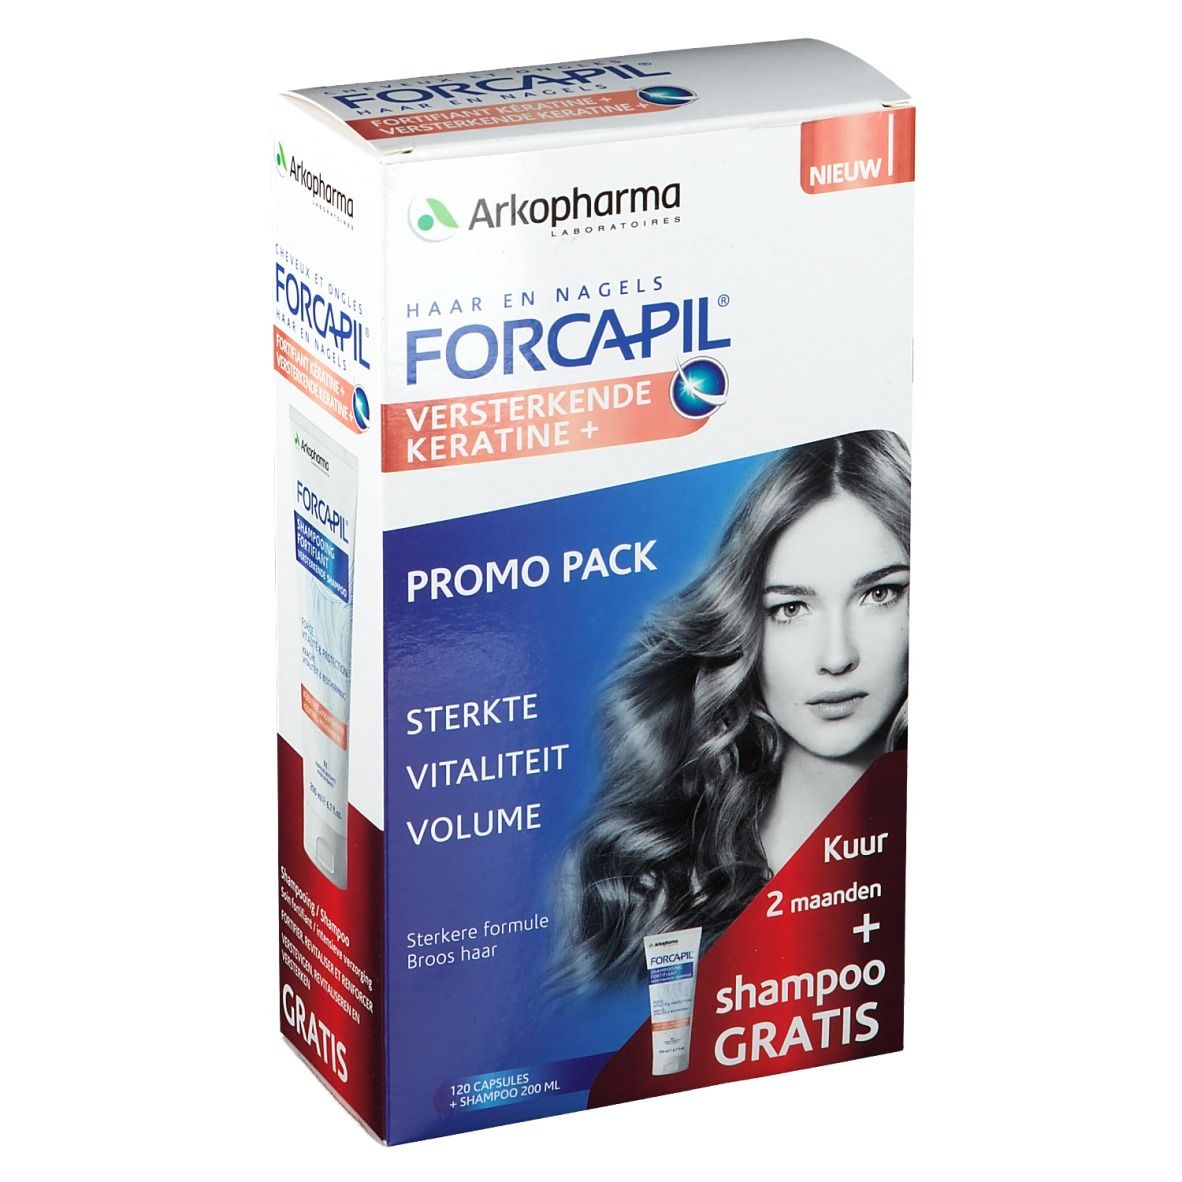 Arkopharma Forcapil® Keratine +